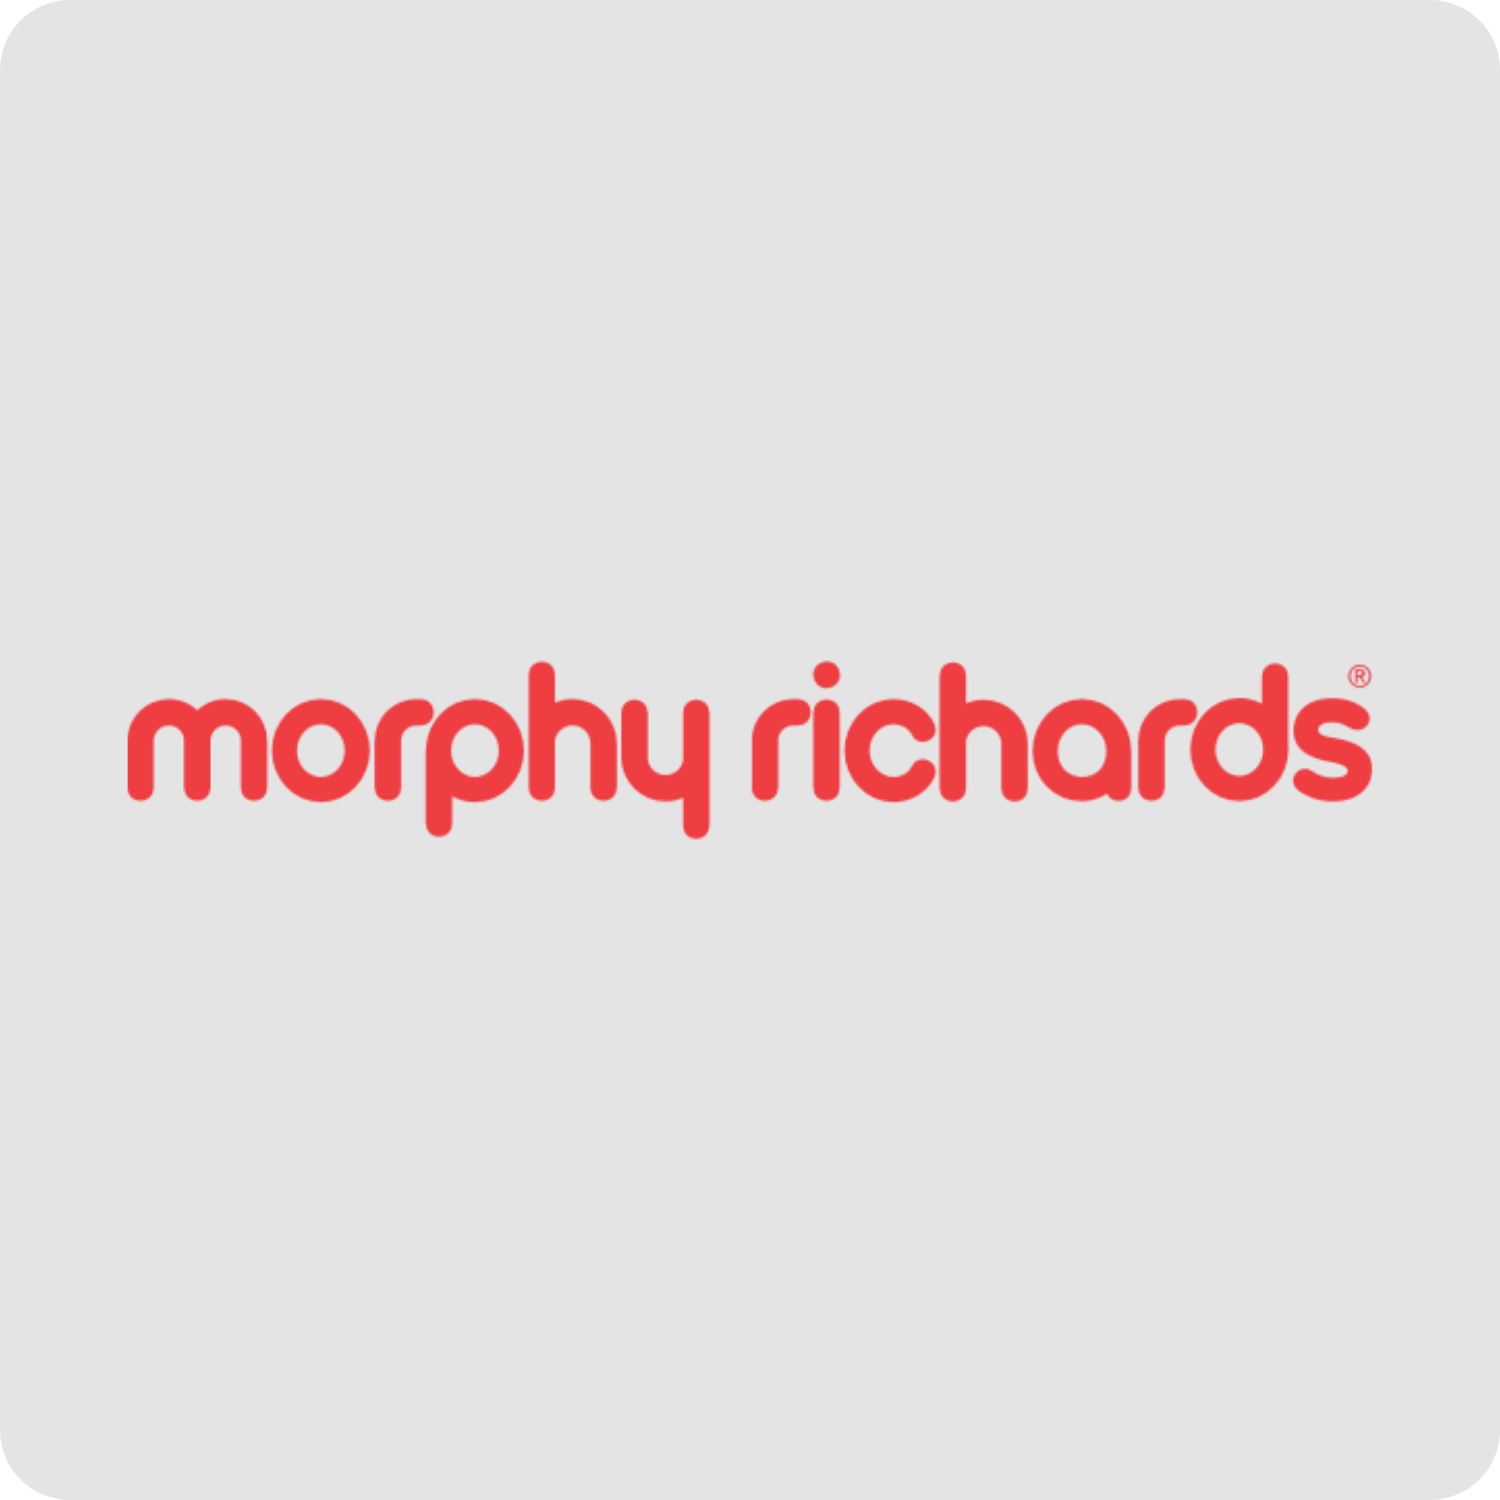 Agoan Brand Morphy richard Logo